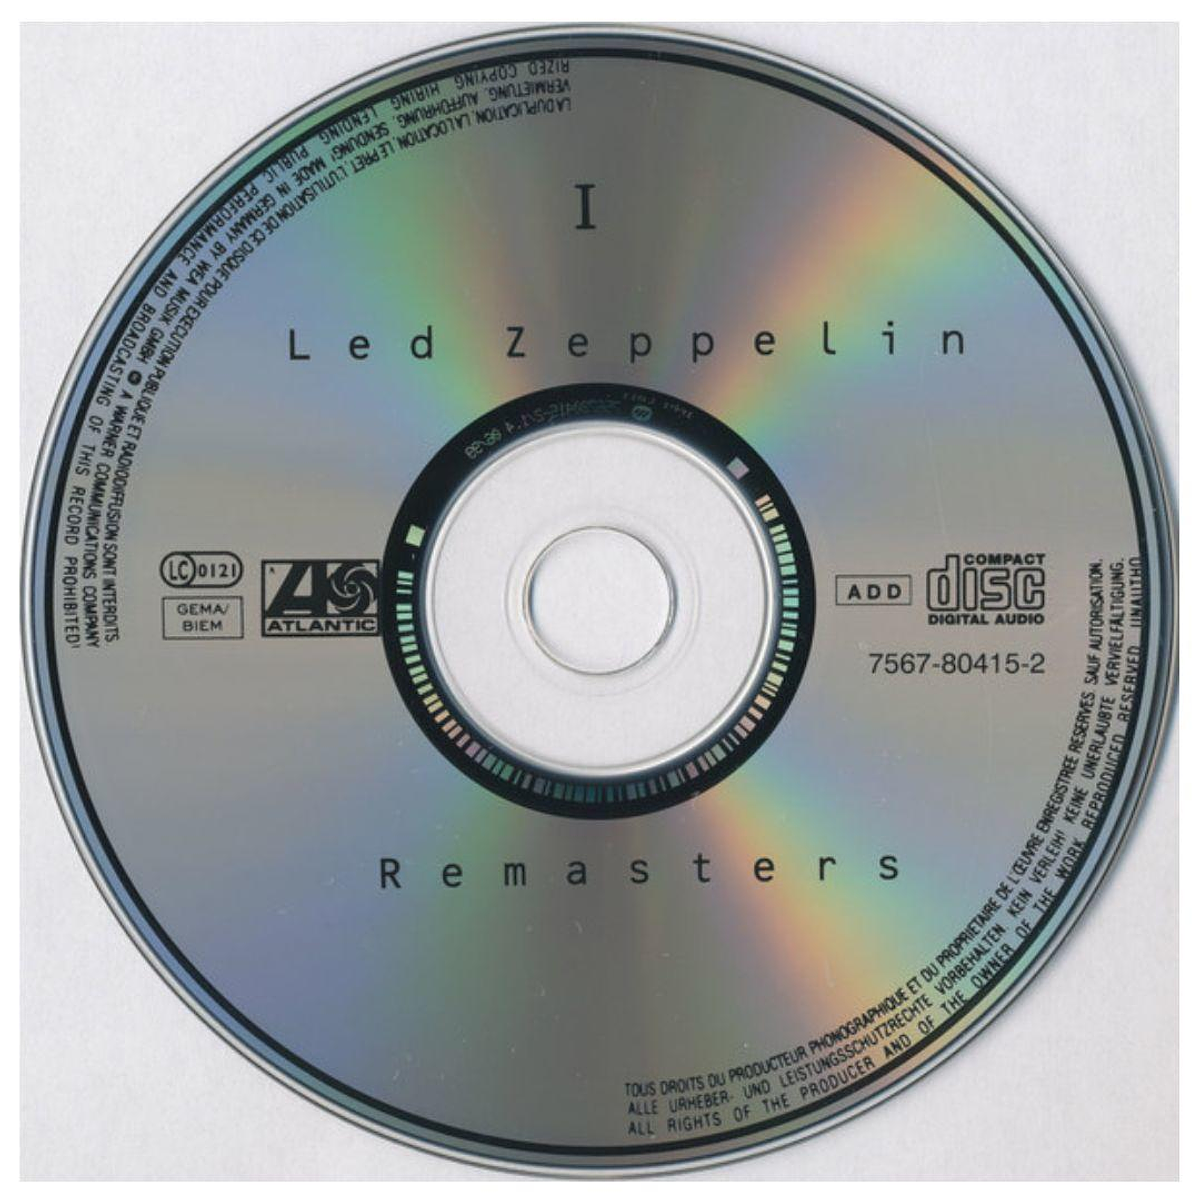 LED ZEPPELIN - REMASTERS (2CD) CD